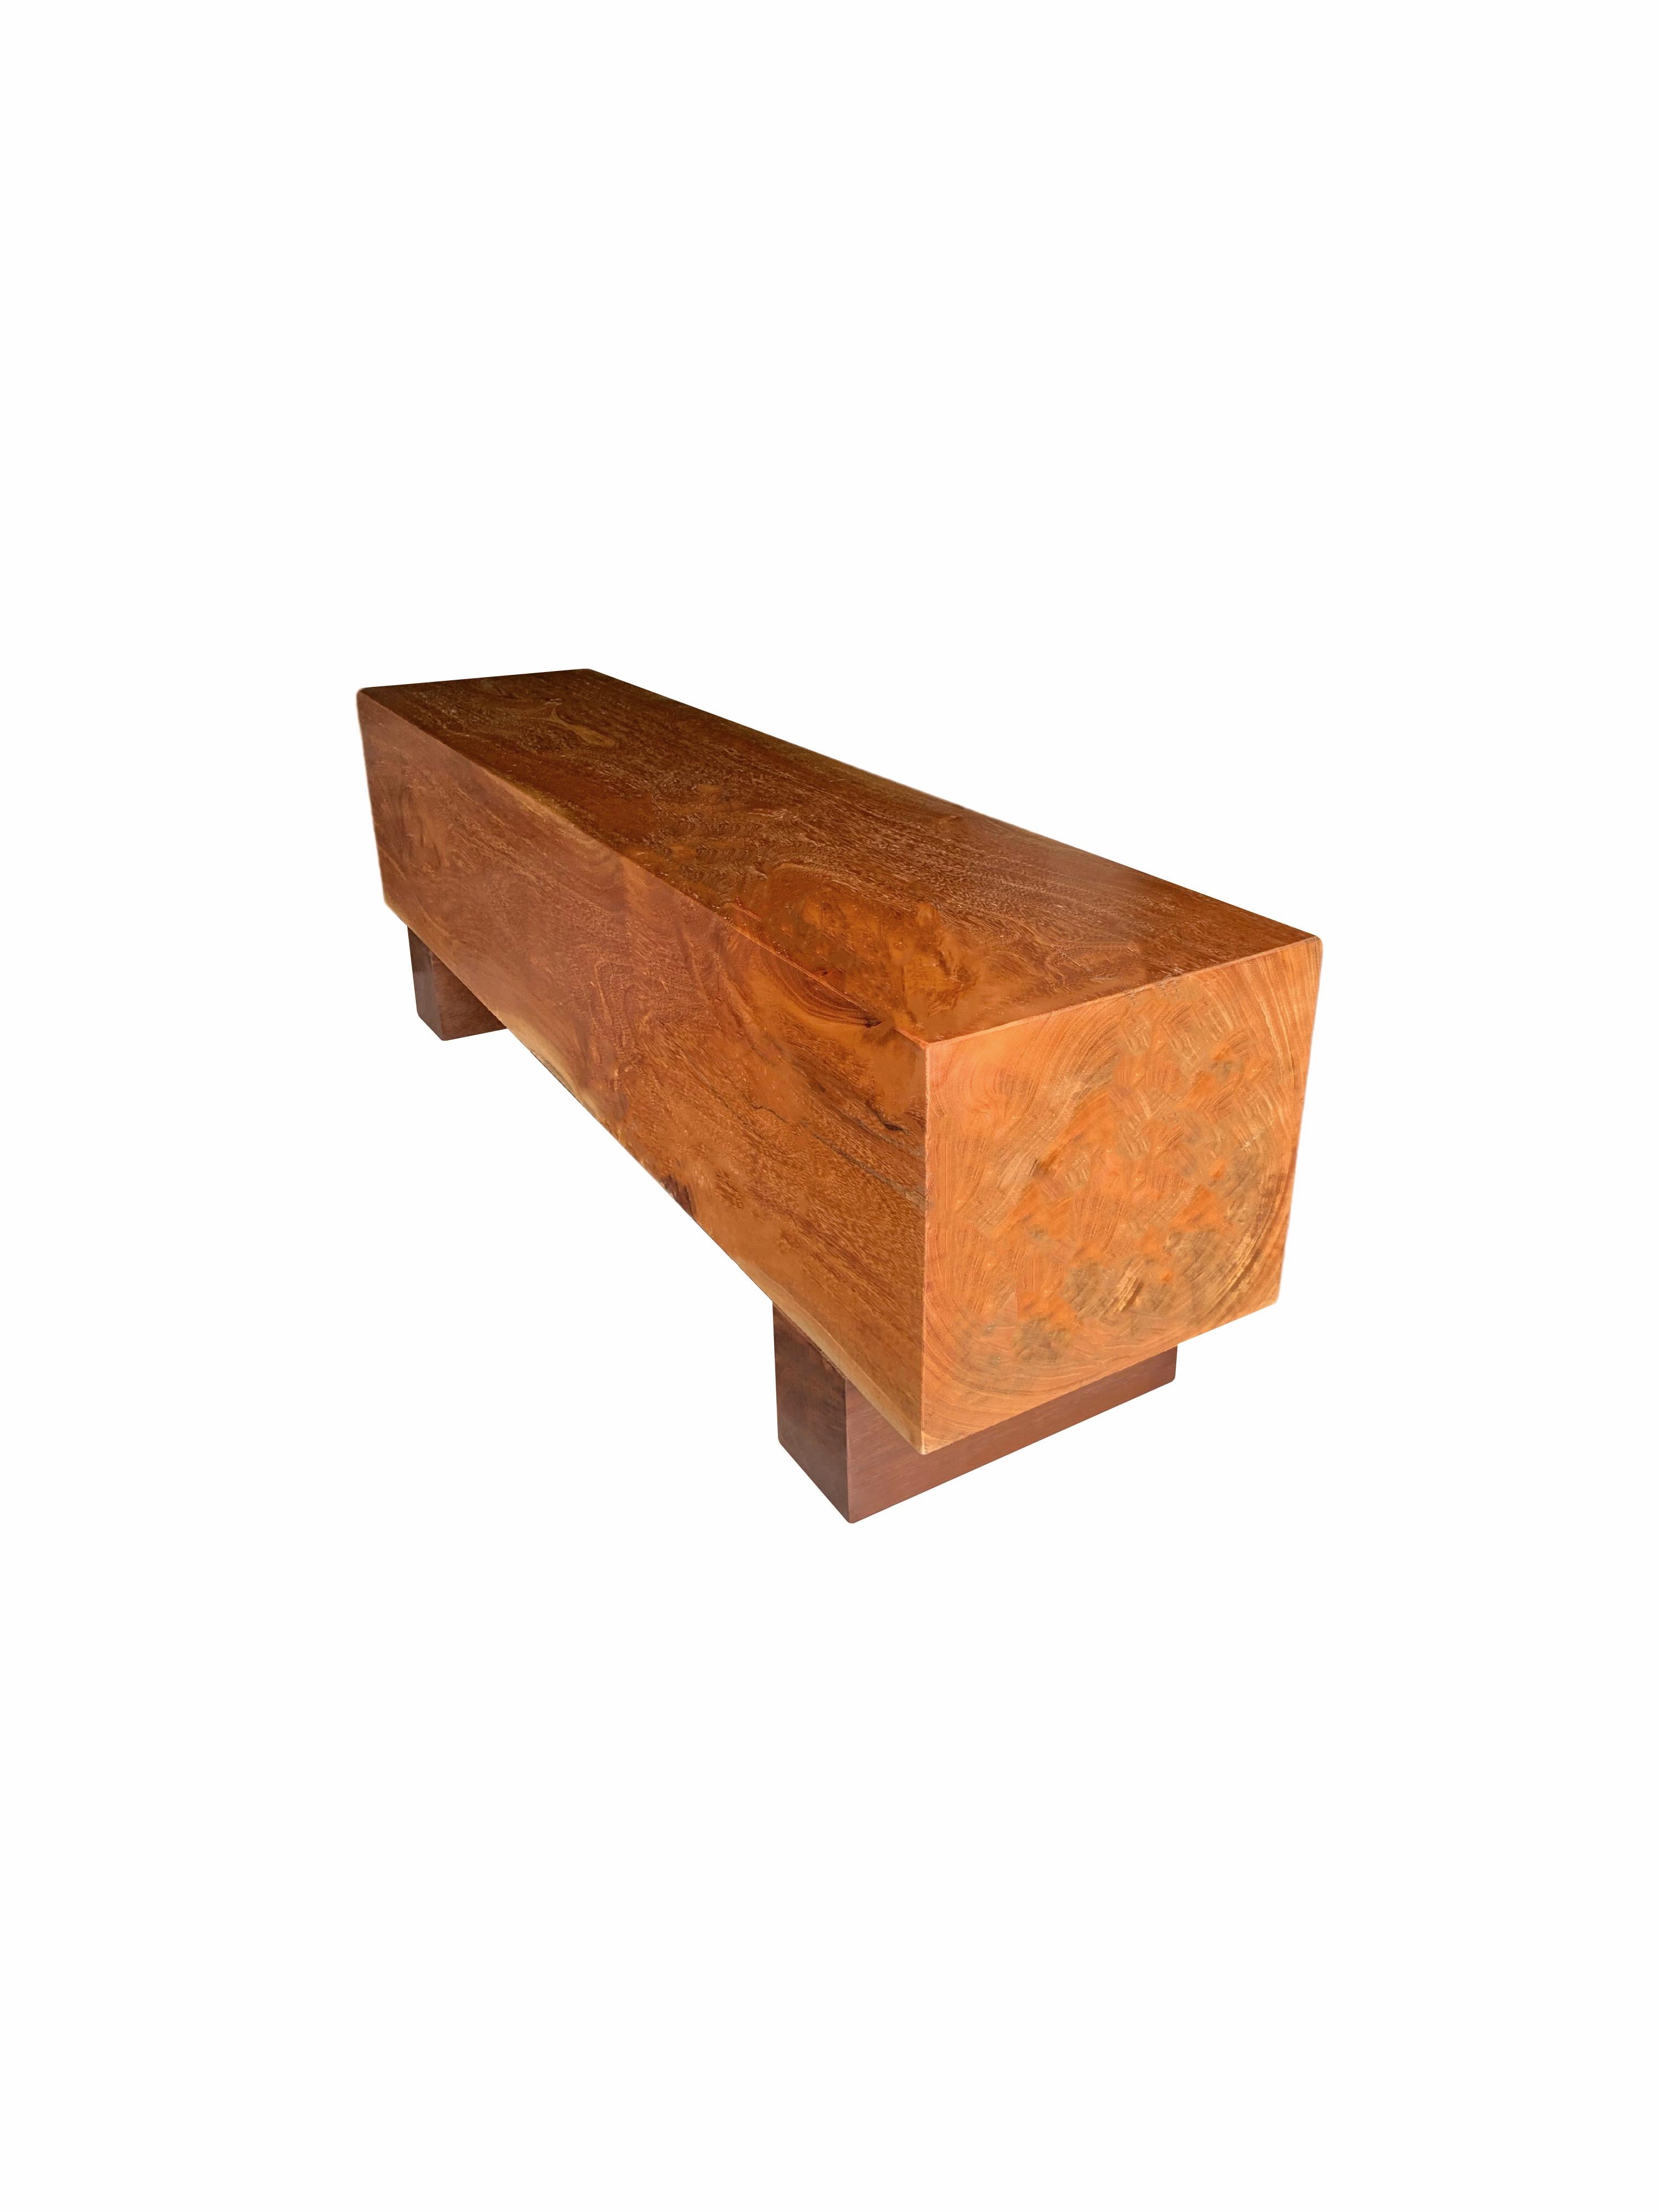 Other Solid Teak Wood Sculptural Bench Modern Organic For Sale